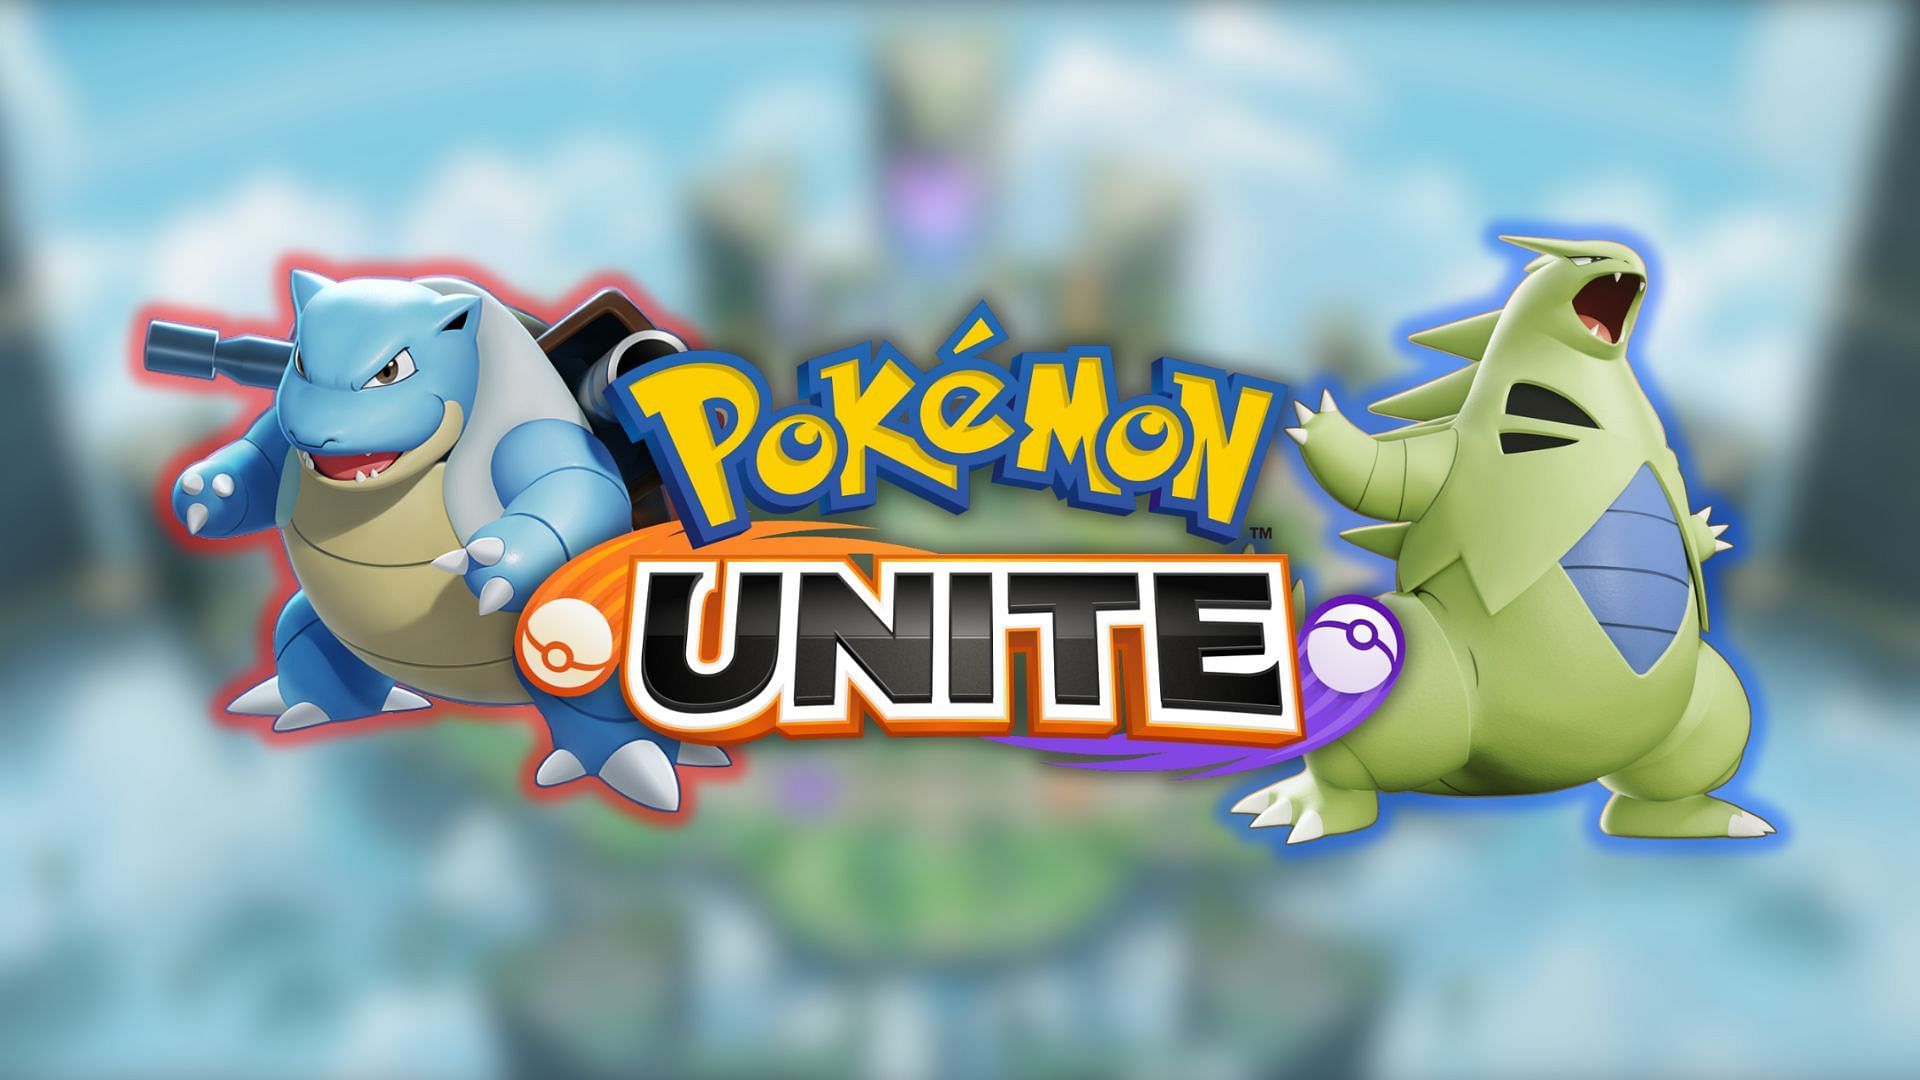 Pokemon Unite update v1.14.1.6 patch notes: Blastoise nerfed, Tyranitar buffed and more